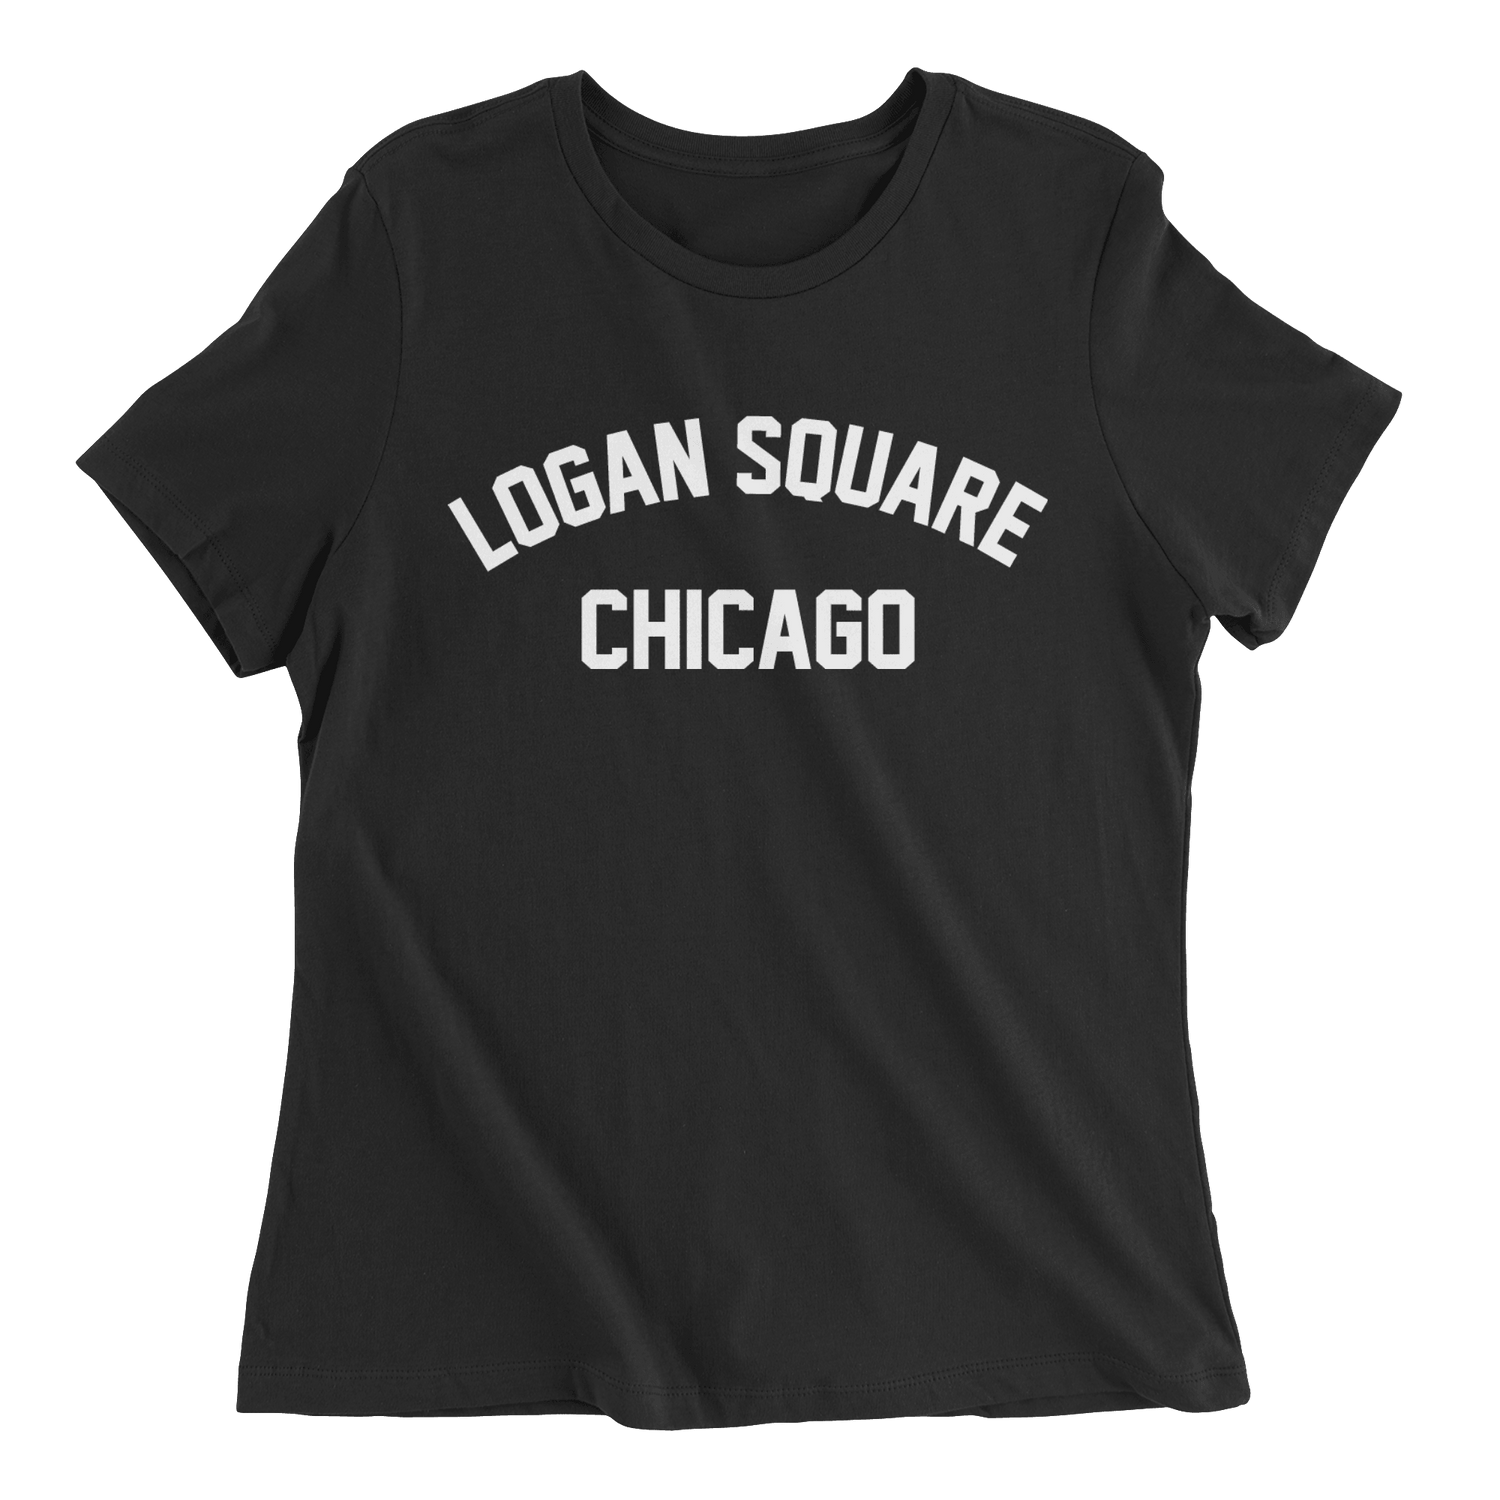 Logan Square - The T-Shirt Deli, Co.